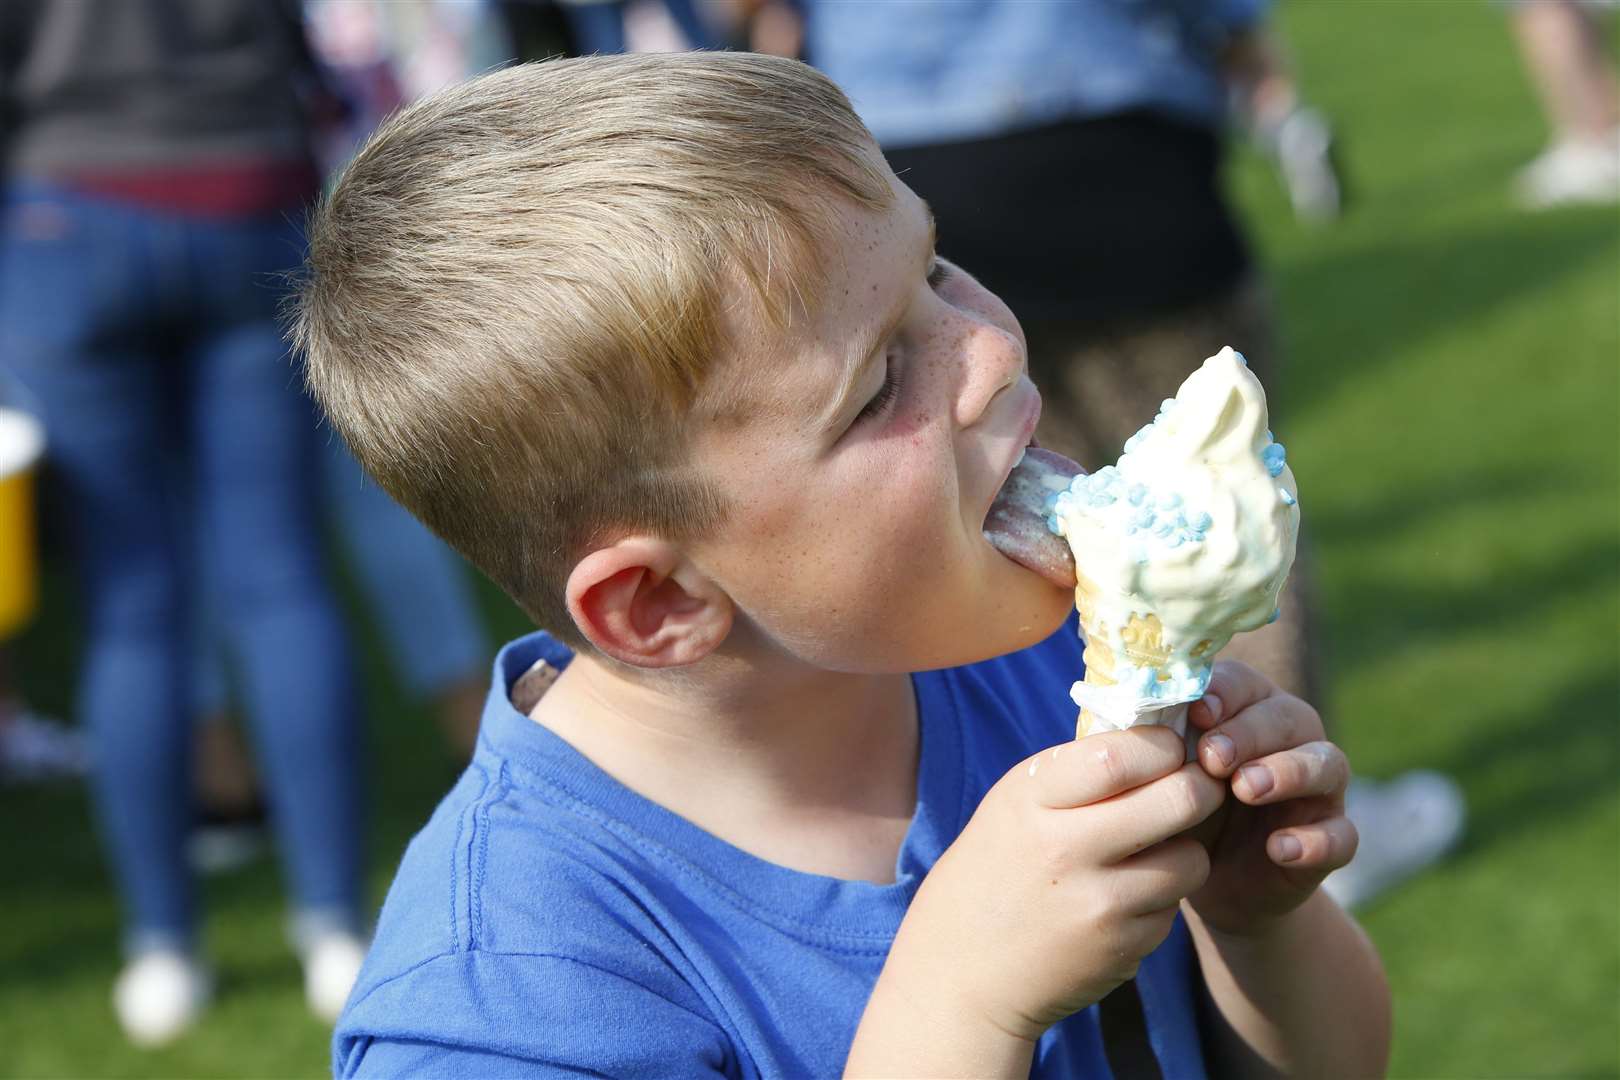 Jude Willes, 7, enjoys an ice cream